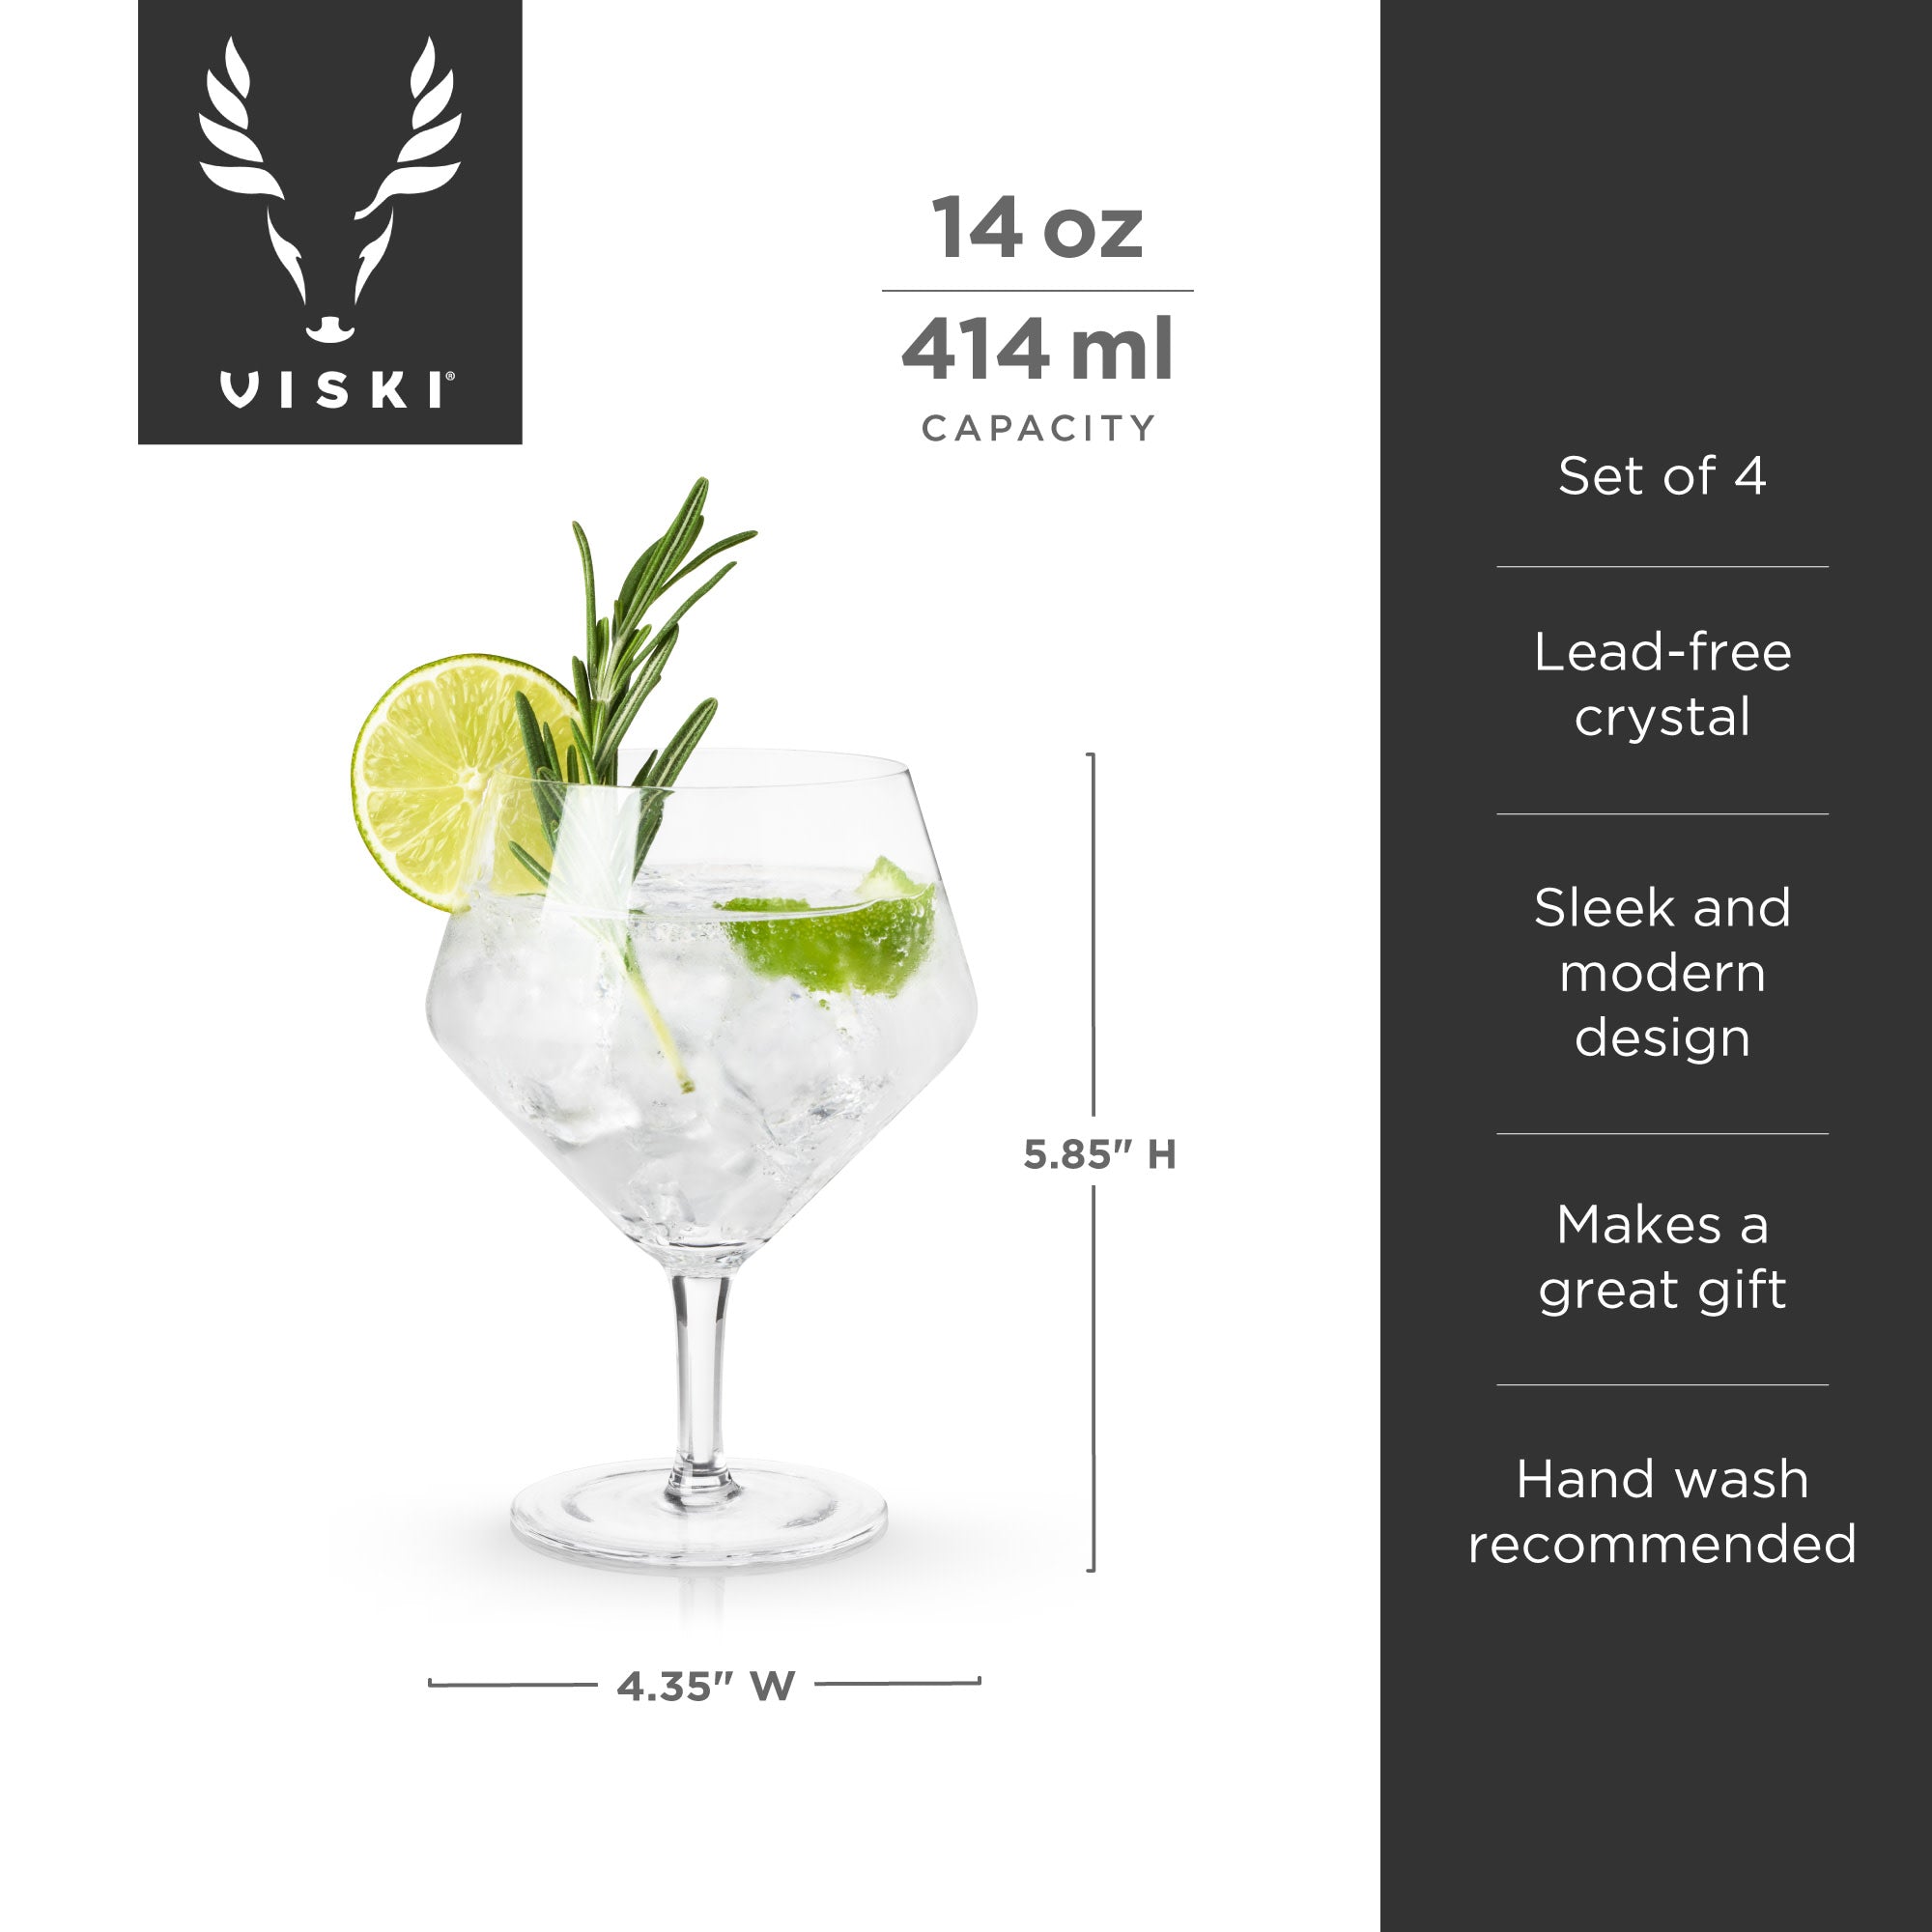 Angled Crystal Gin & Tonic Glasses by Viski® (set of 4)